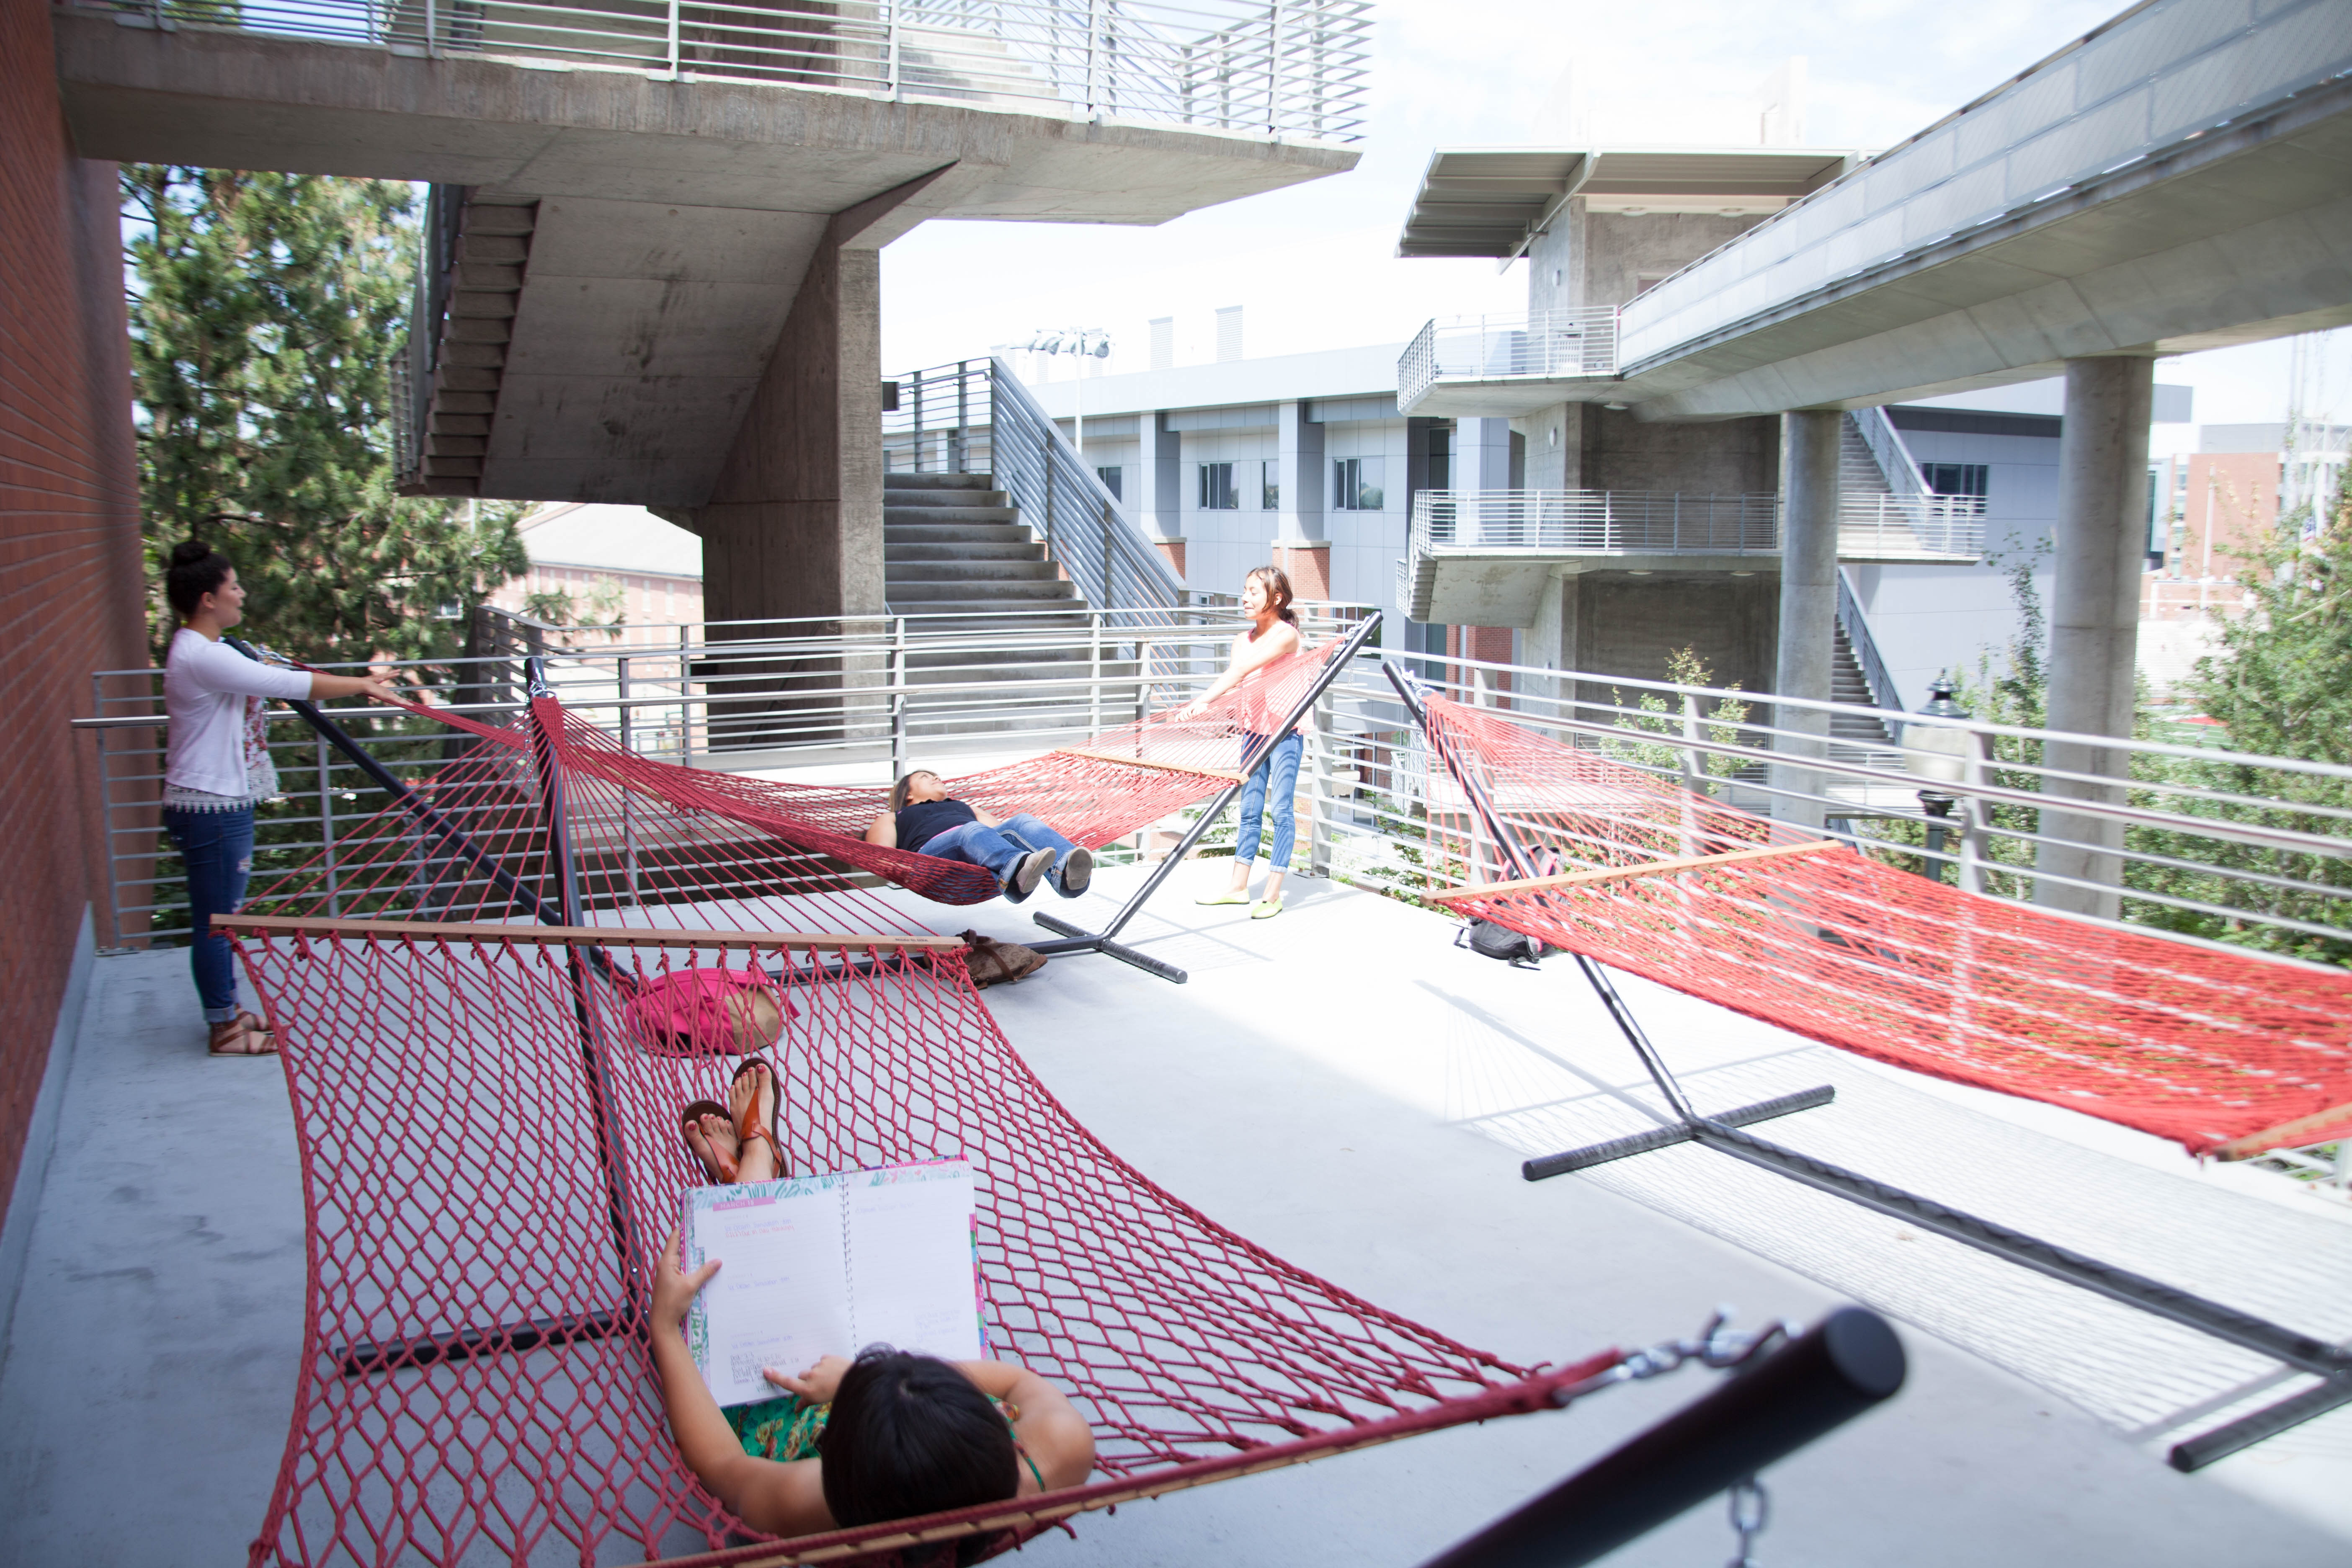 Students sitting on hammocks